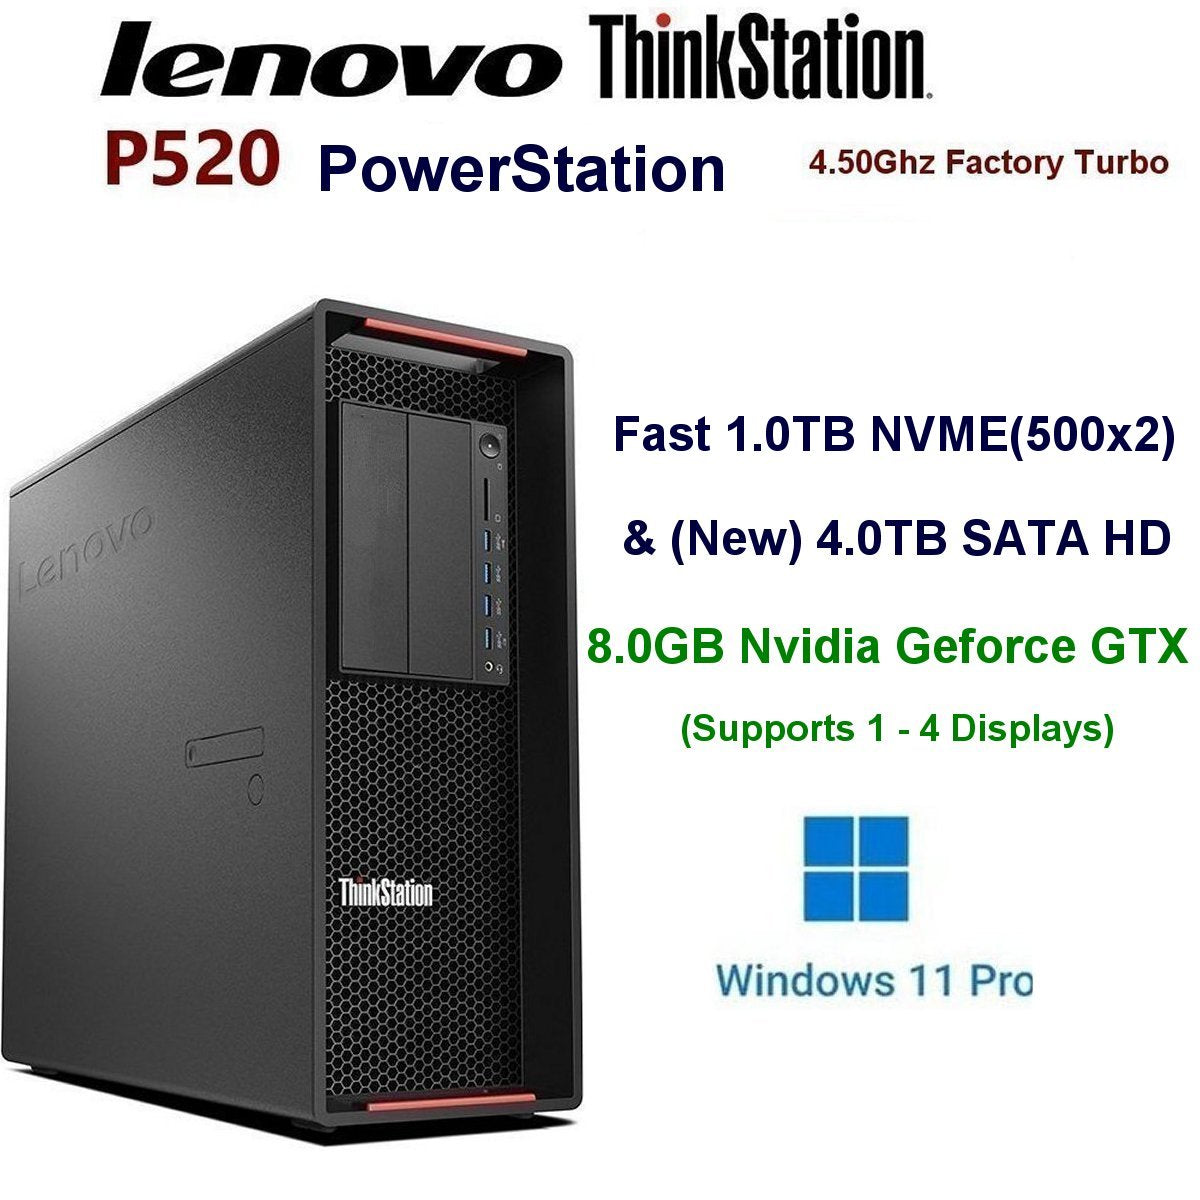 Lenovo PowerStation P520 Workstation PC 3.70Ghz-4.50Ghz Intel Xeon W2135 Processor 128GB Ram 1.0TB SSD & 4.0TB SATA HD 8.0GB Nvidia GTX-Geforce Windows 11 Pro